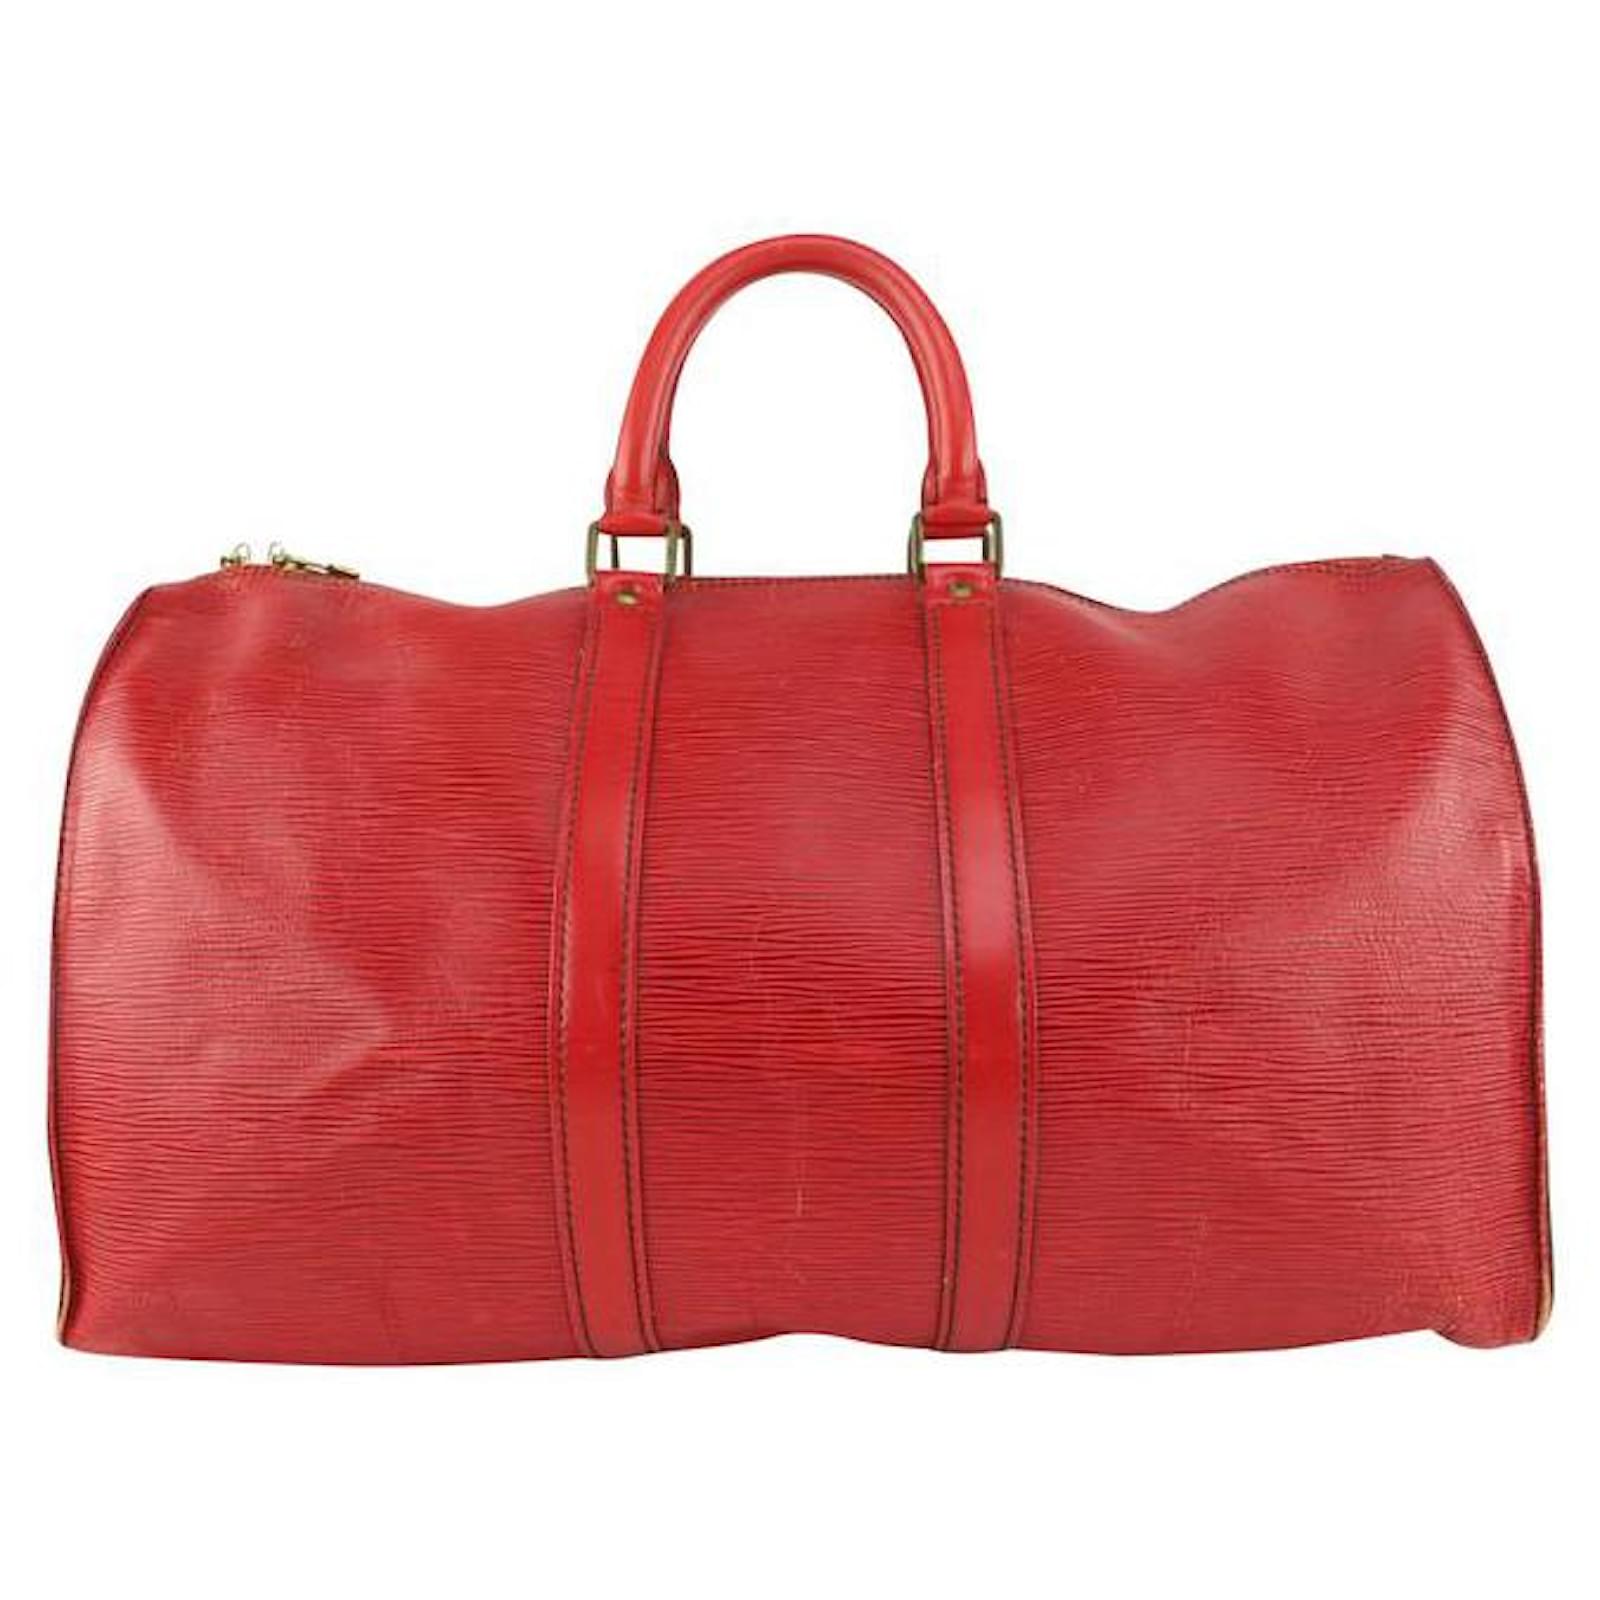 Louis Vuitton Epi Leather Keepall 45 Duffle Bag, Louis Vuitton Handbags